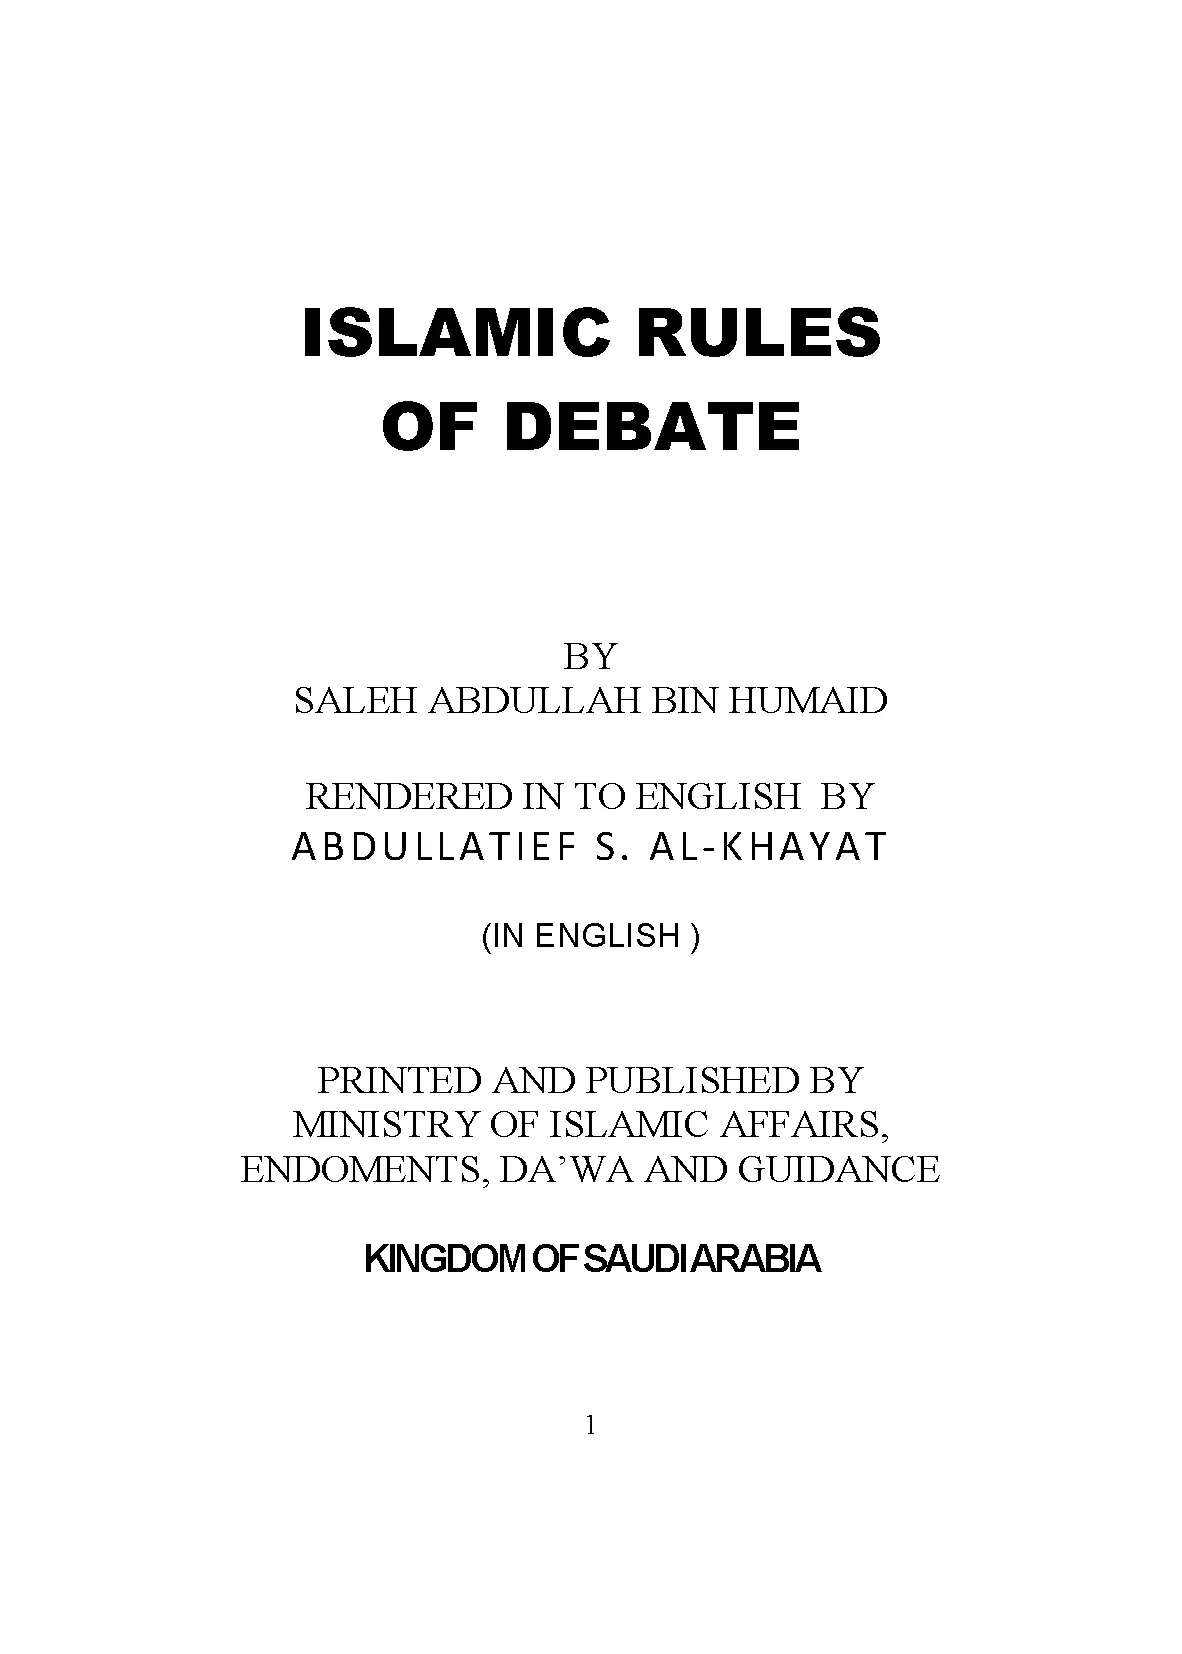 ISLAMIC RULES OF DEBATE